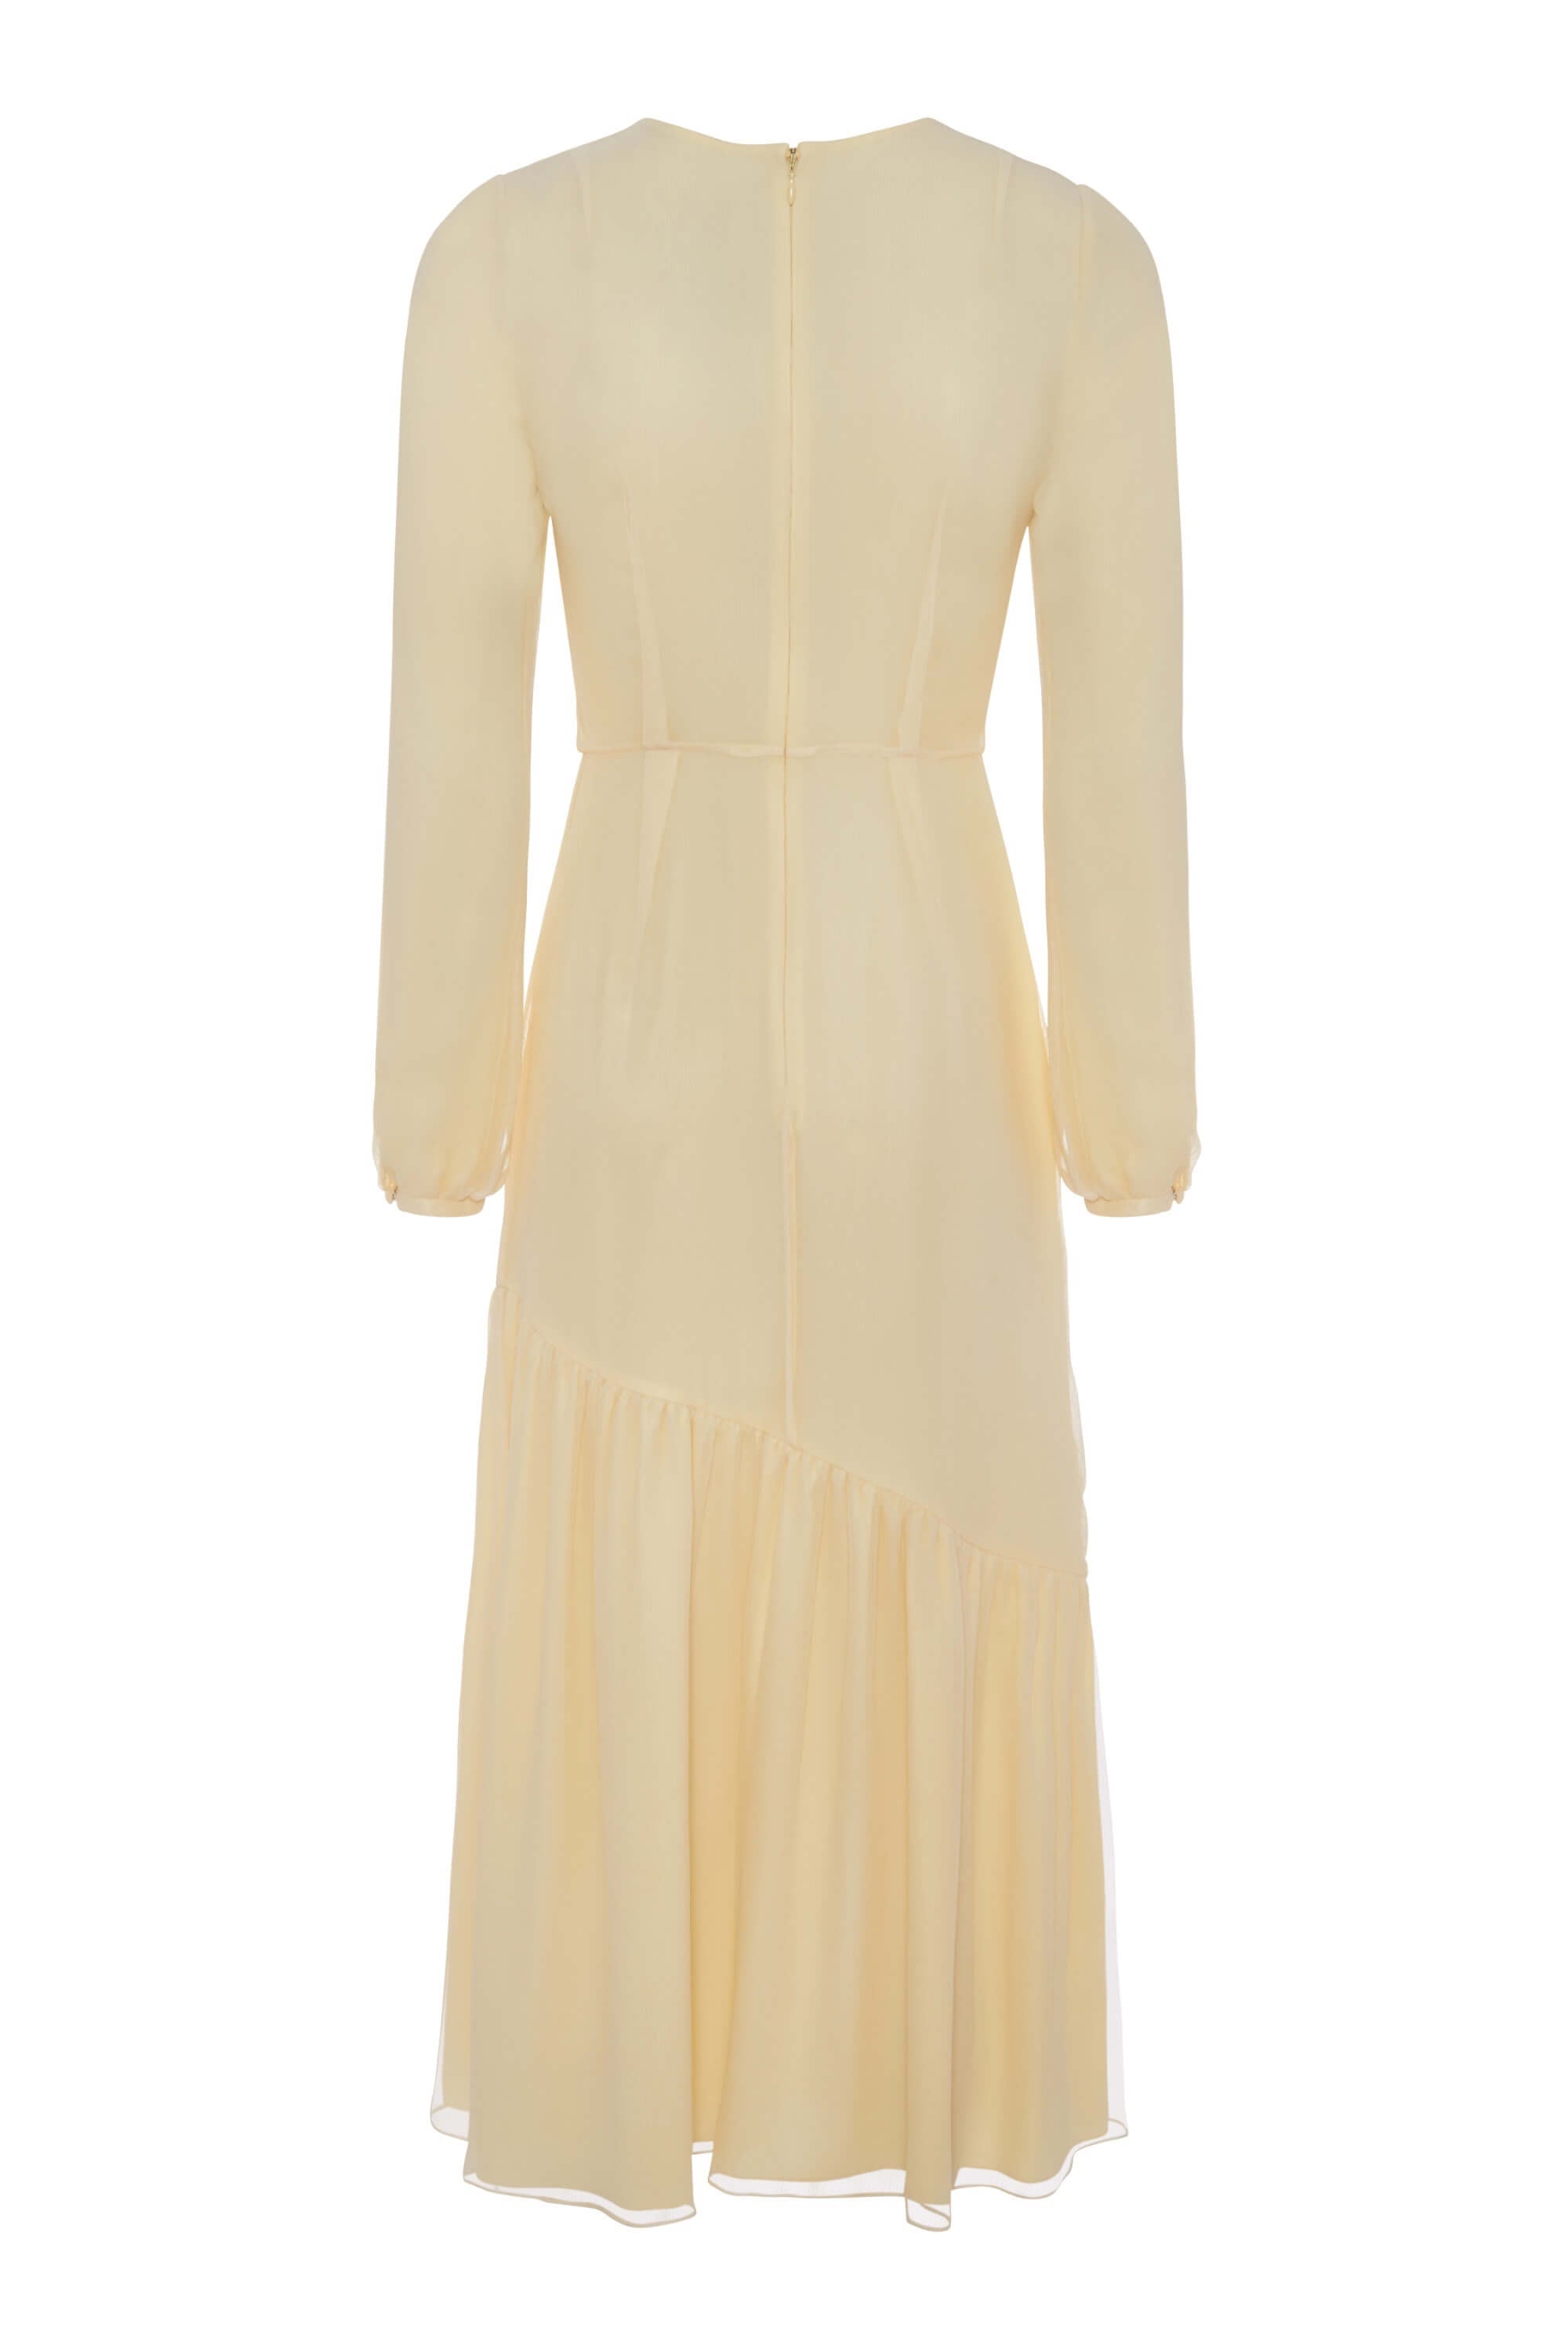 Stevie Yellow Crinkle Chiffon Dress